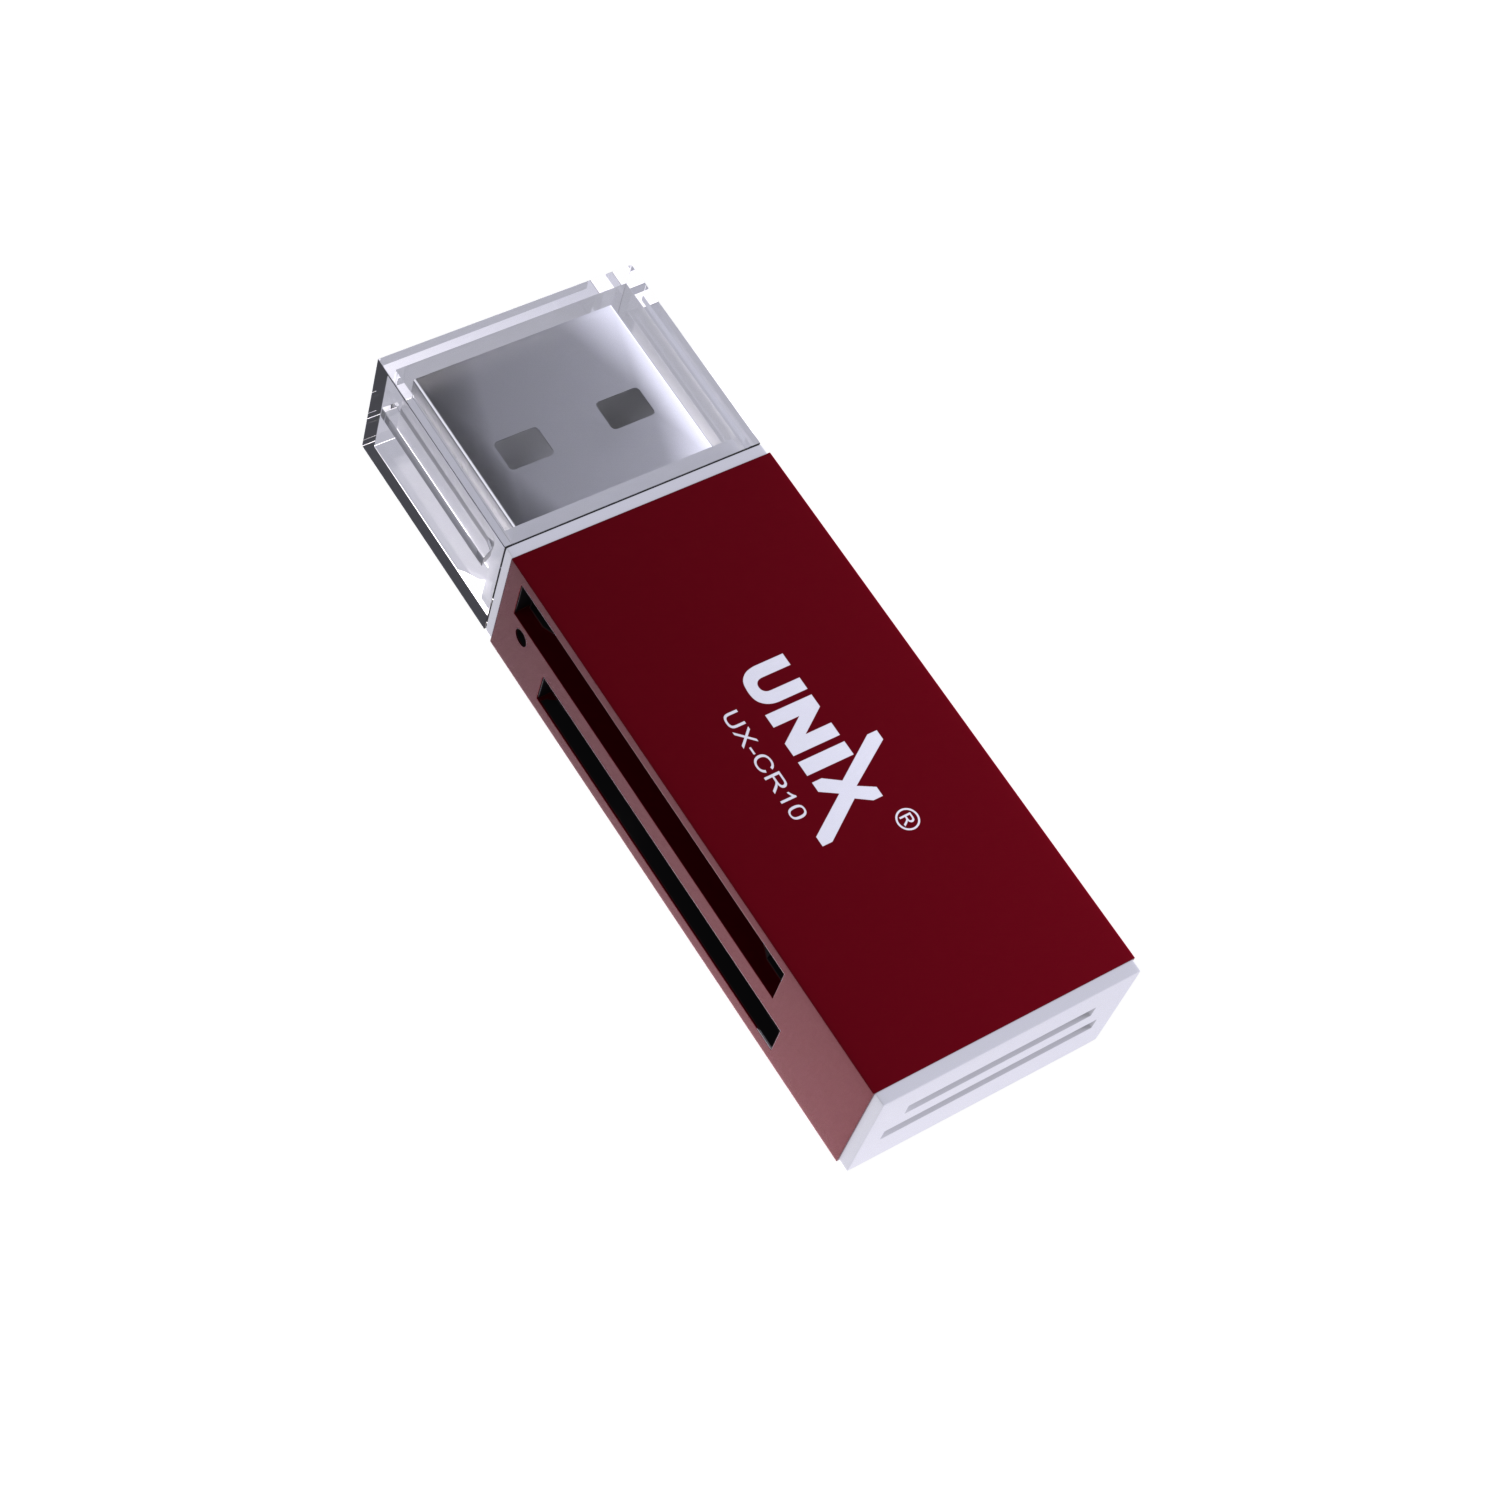 Unix UX-CR10 Card Reader | USB 3.0, High-Speed Data Transfer back